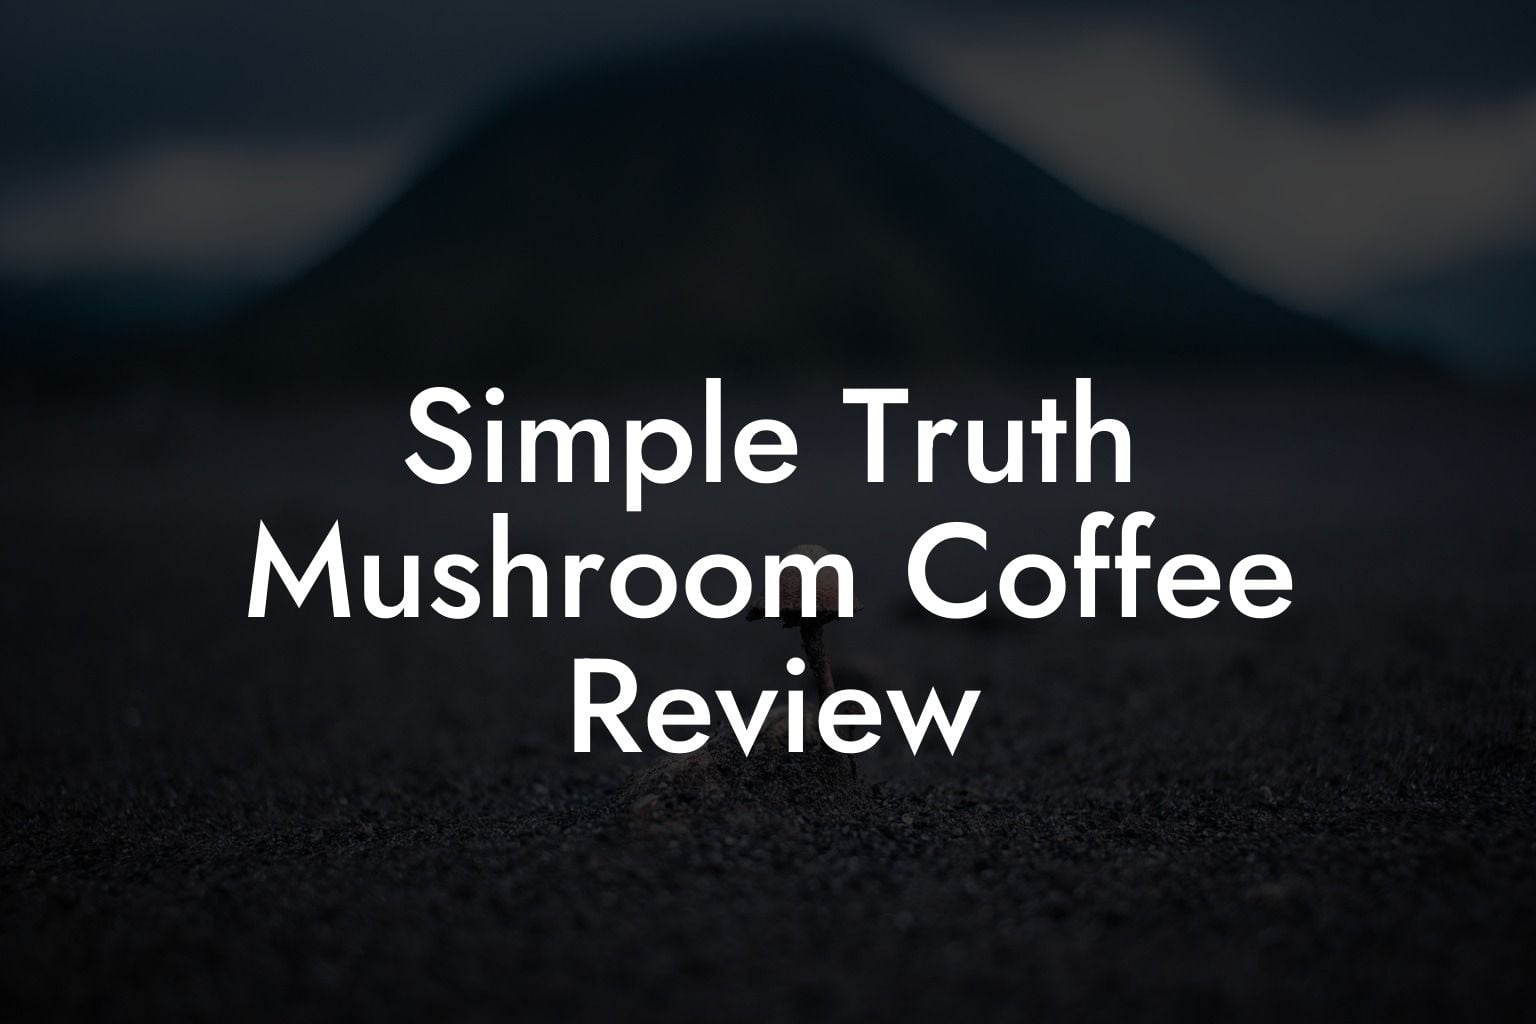 Simple Truth Mushroom Coffee Review